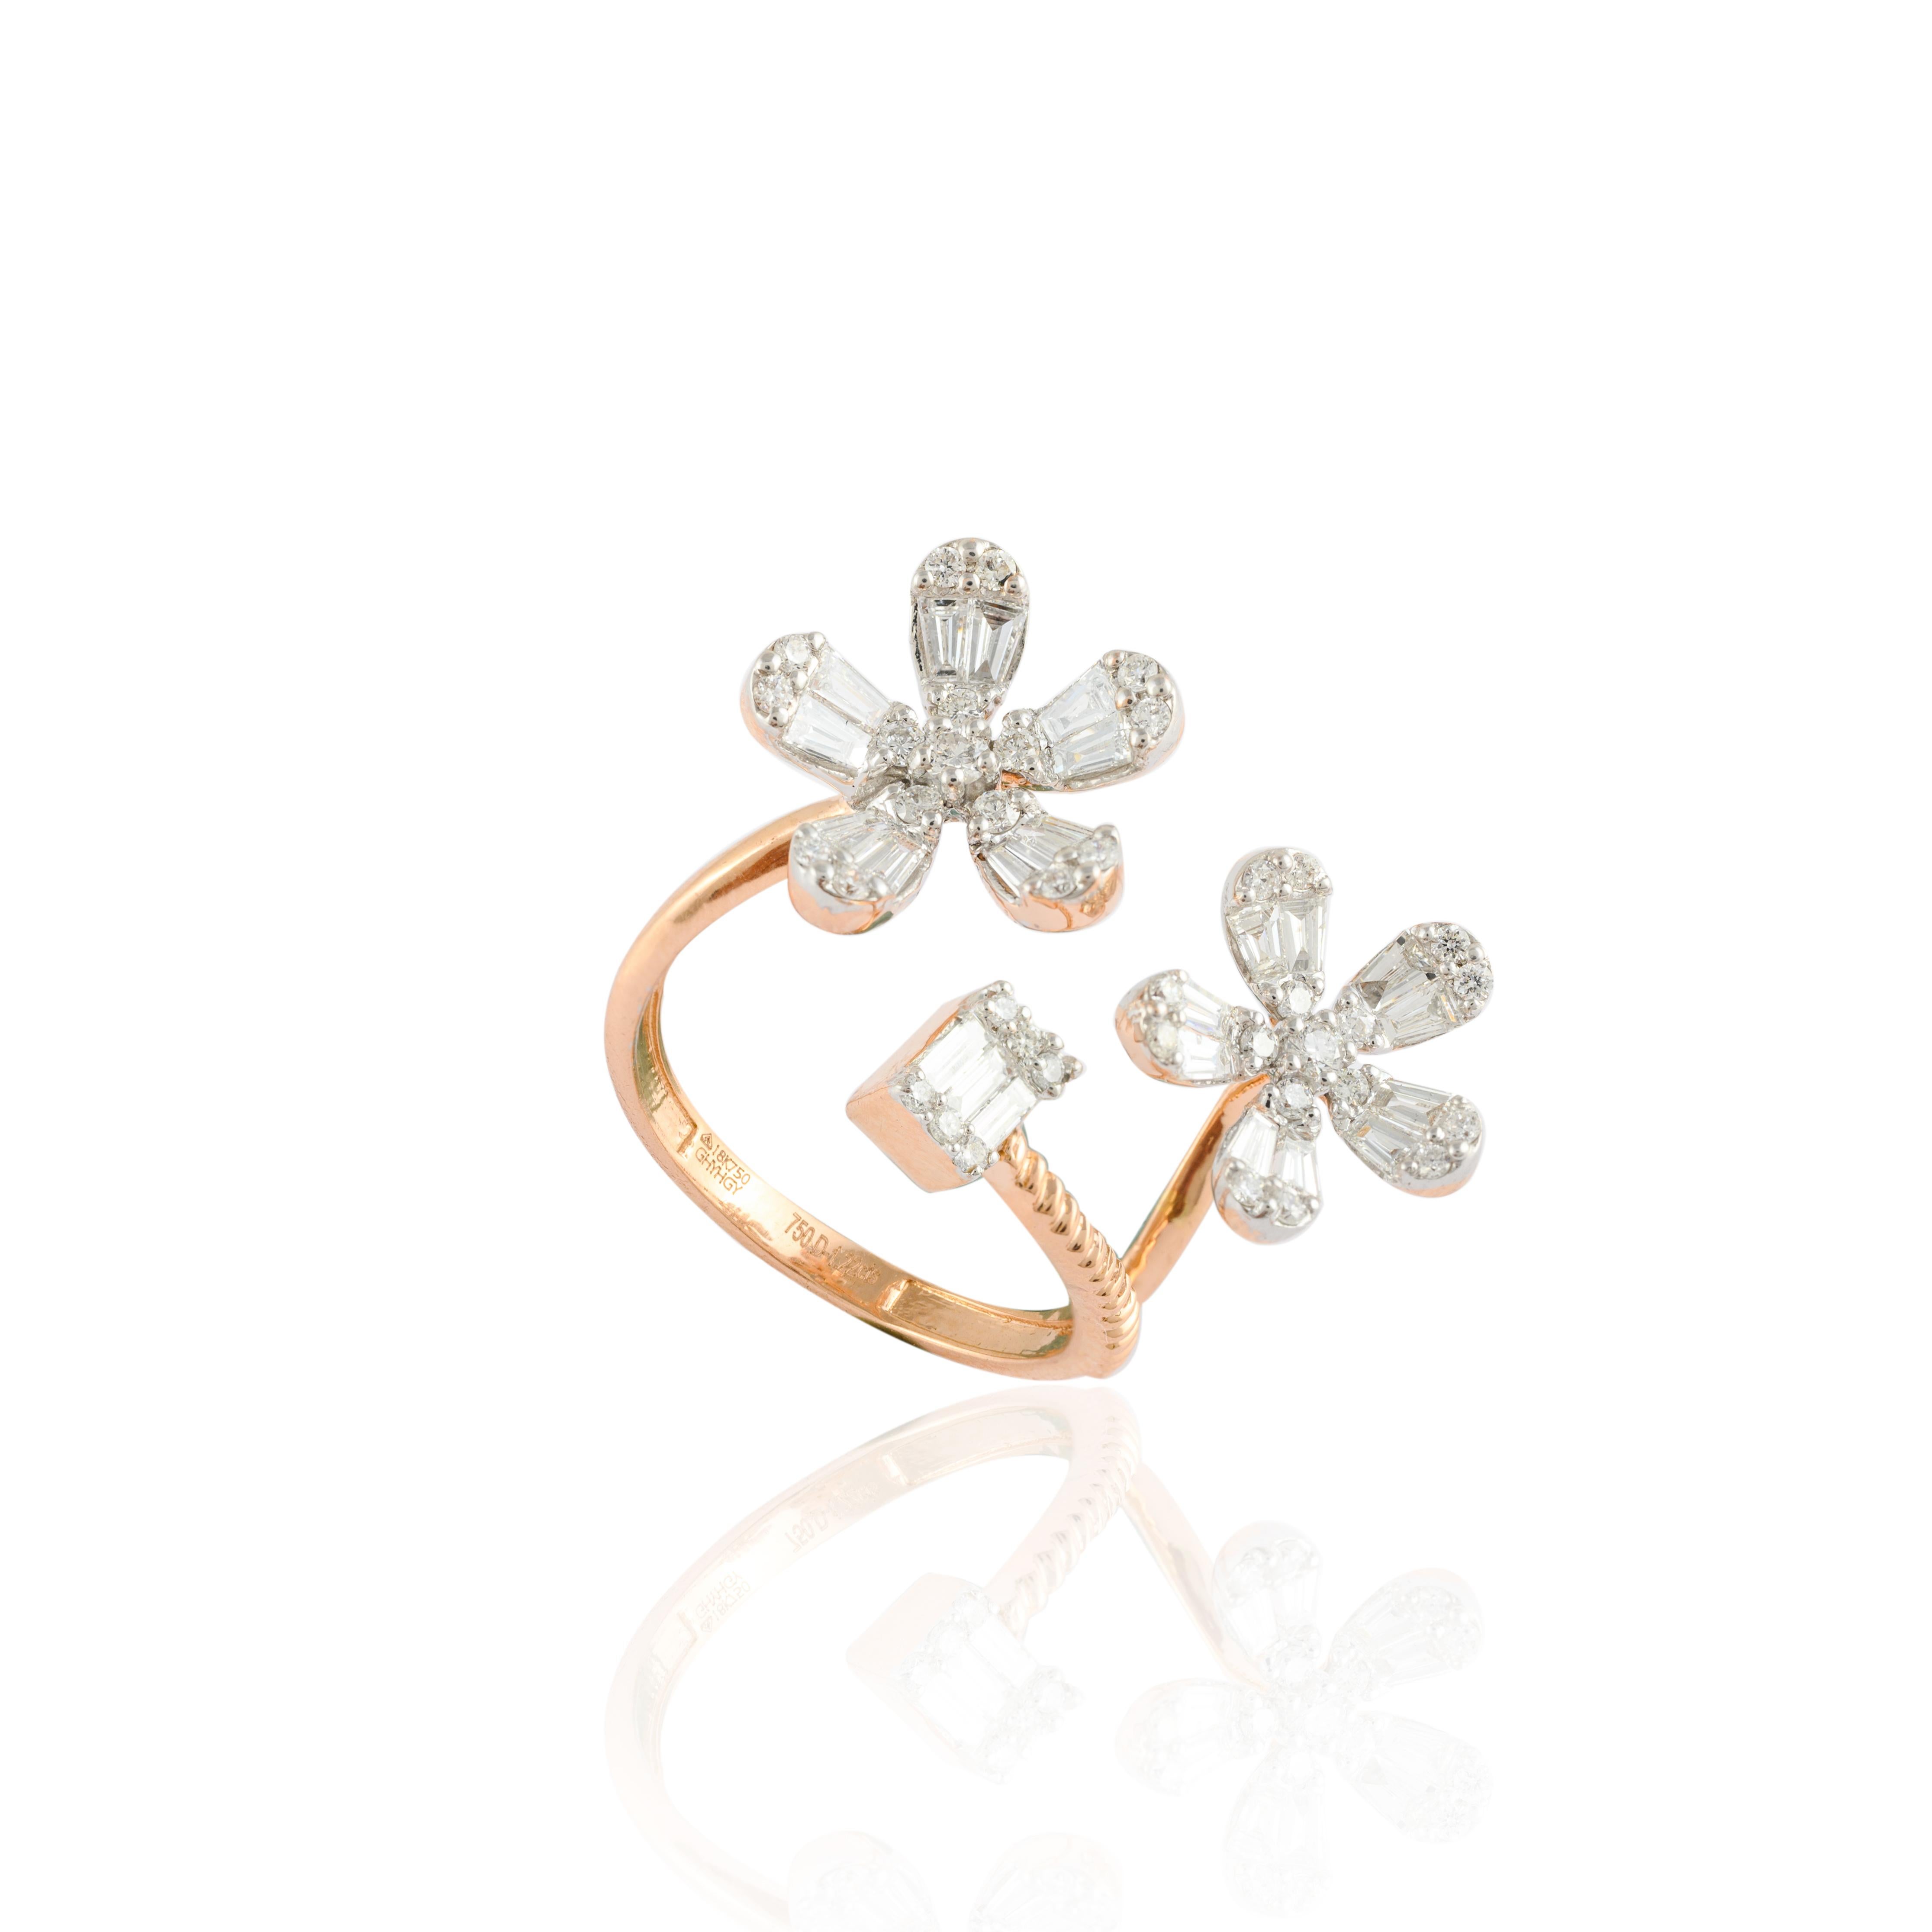 For Sale:  18kt Solid Rose Gold Designer Women's Stunning Diamond Floral Ring 10